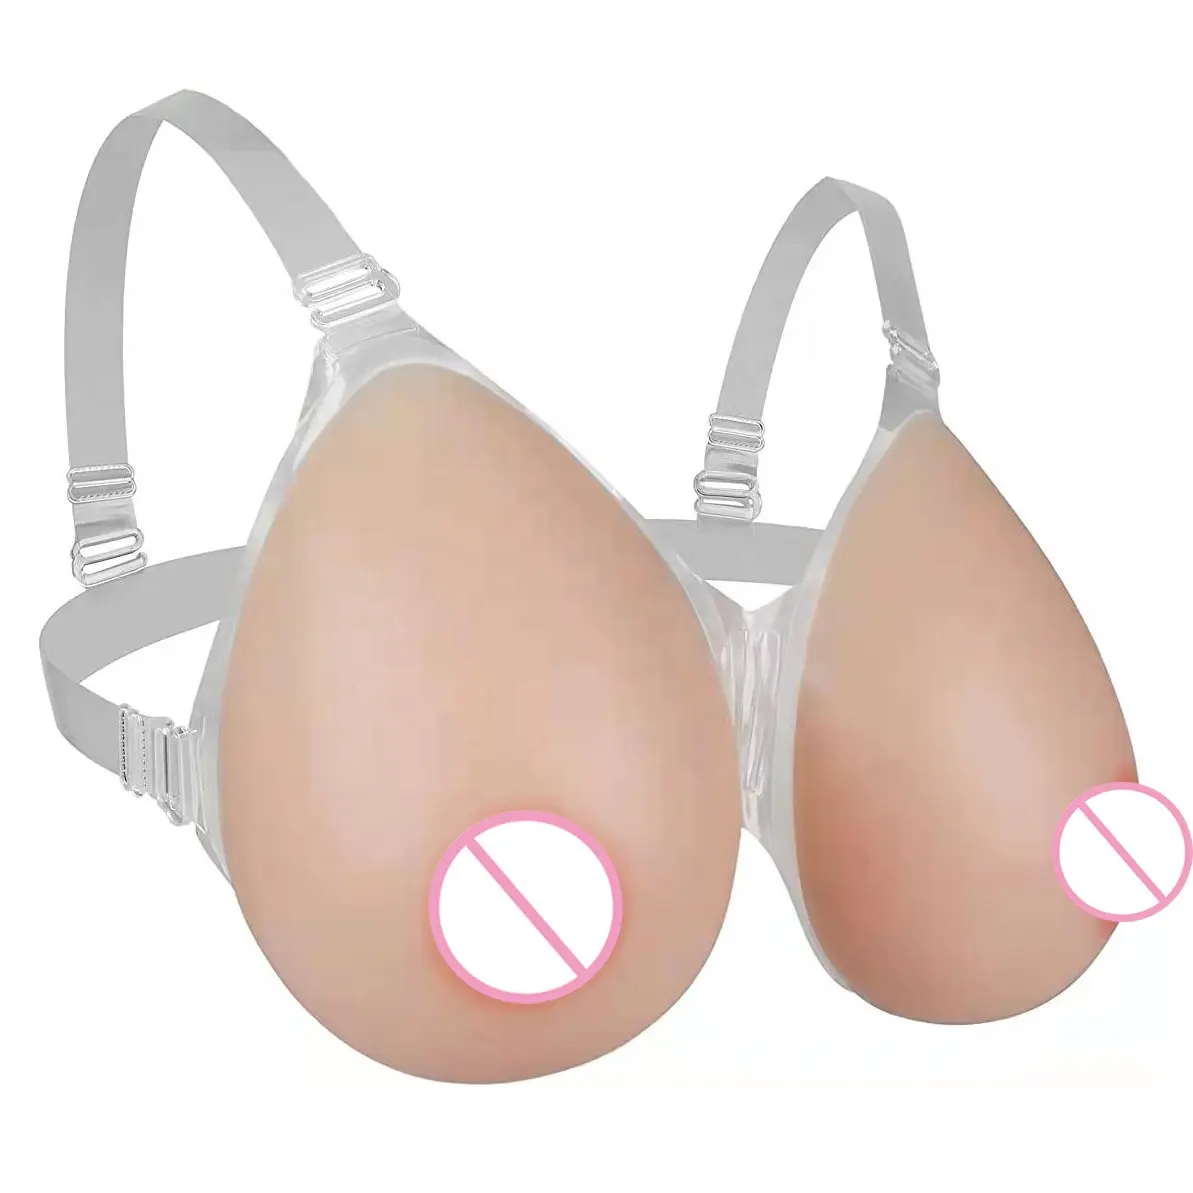 artificial silicon boobs breast forms for men